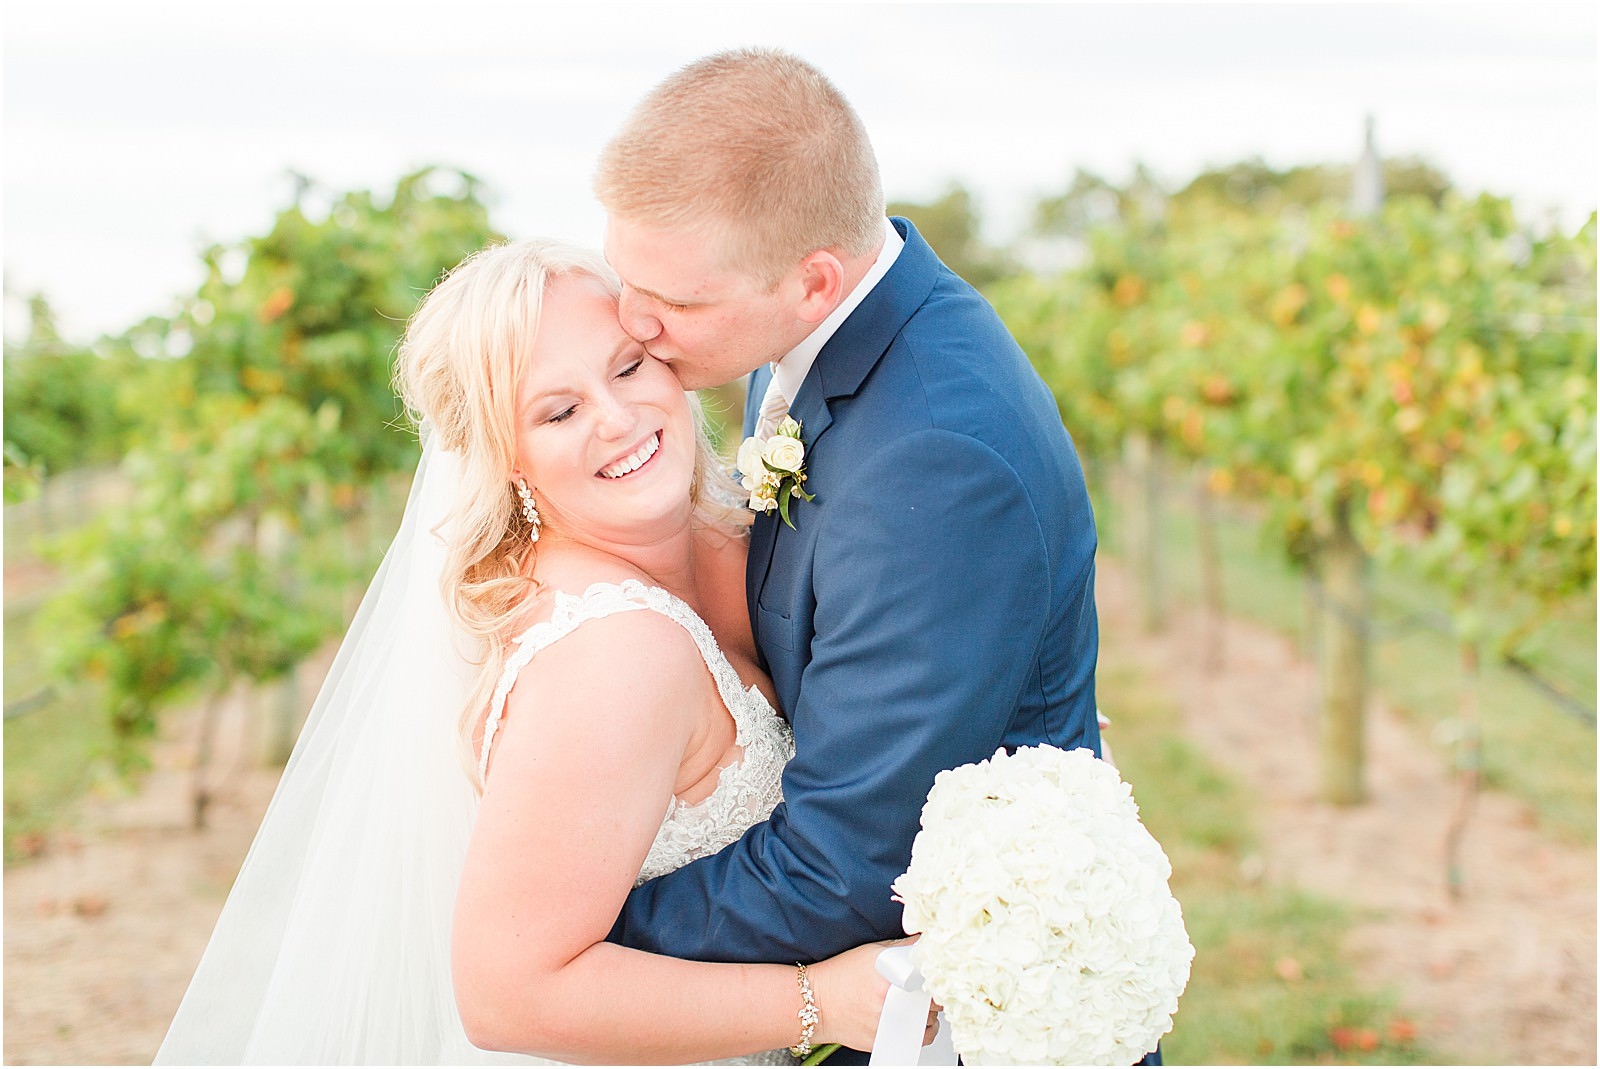 Kelsey and Caleb | Walkers Bluff Winery Wedding | Bret and Brandie Photography102.jpg